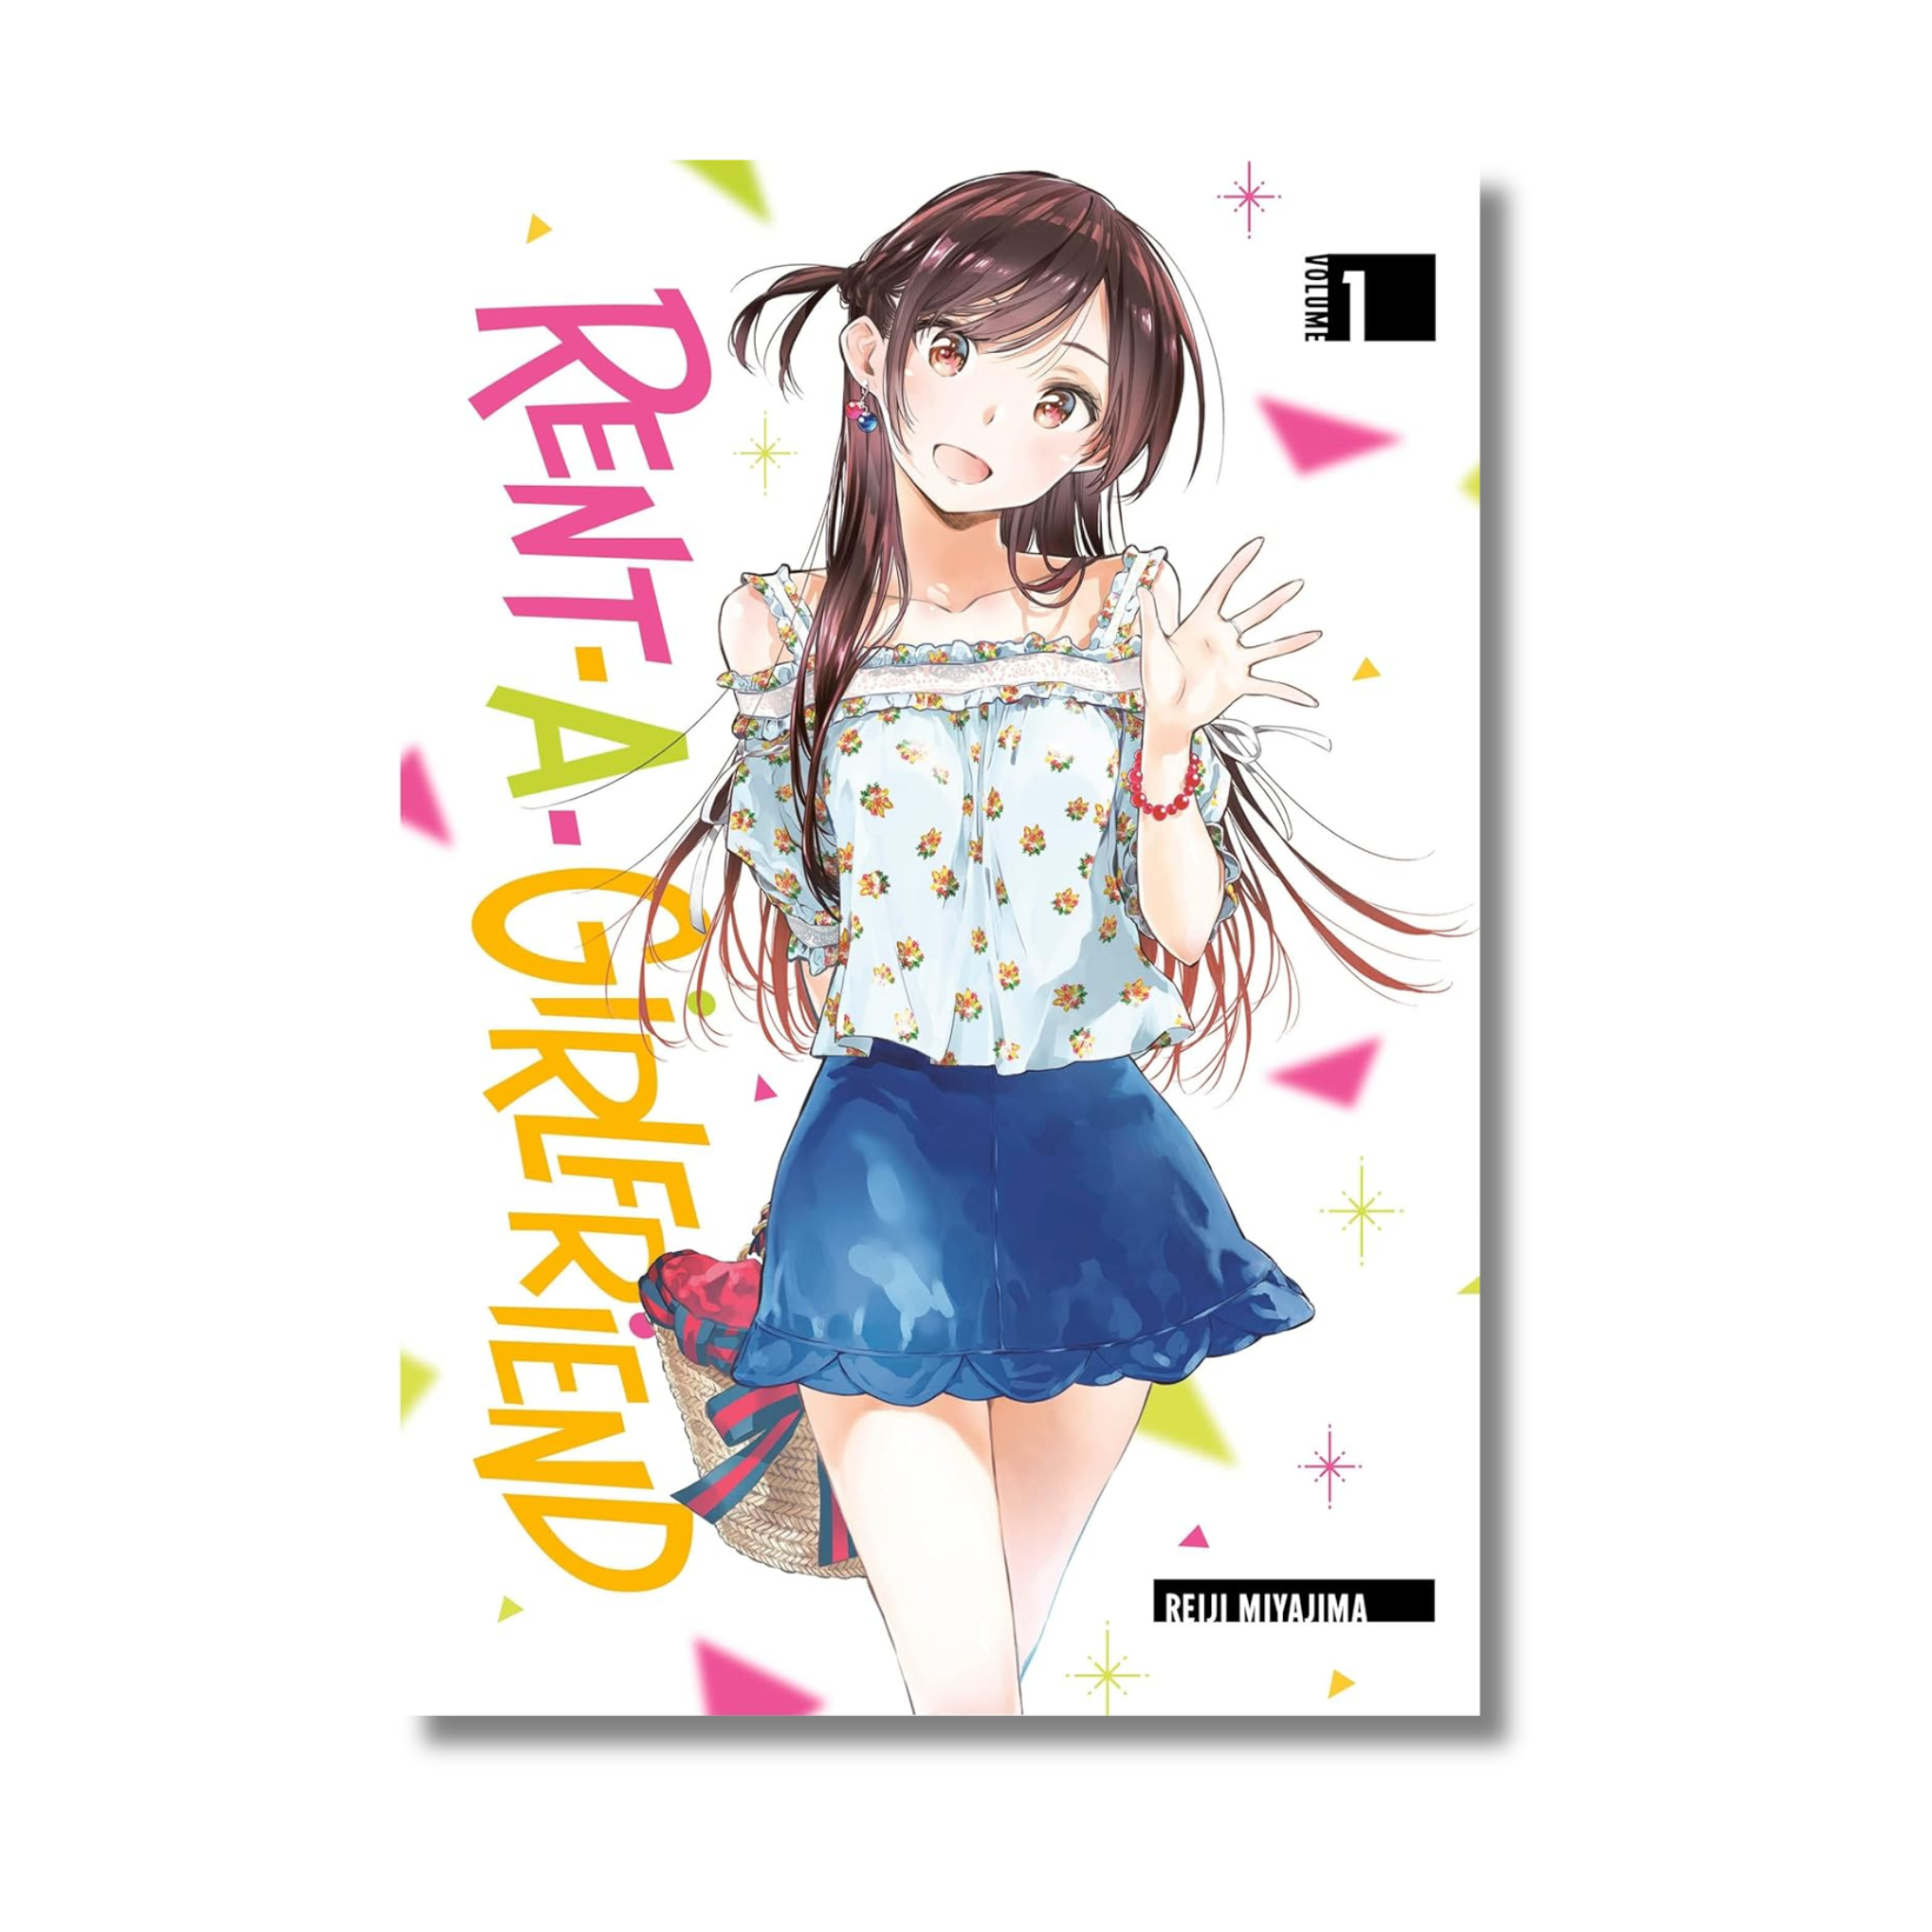 Rent A Girlfriend By Reiji Miyajima Paperback Gyaanstore 